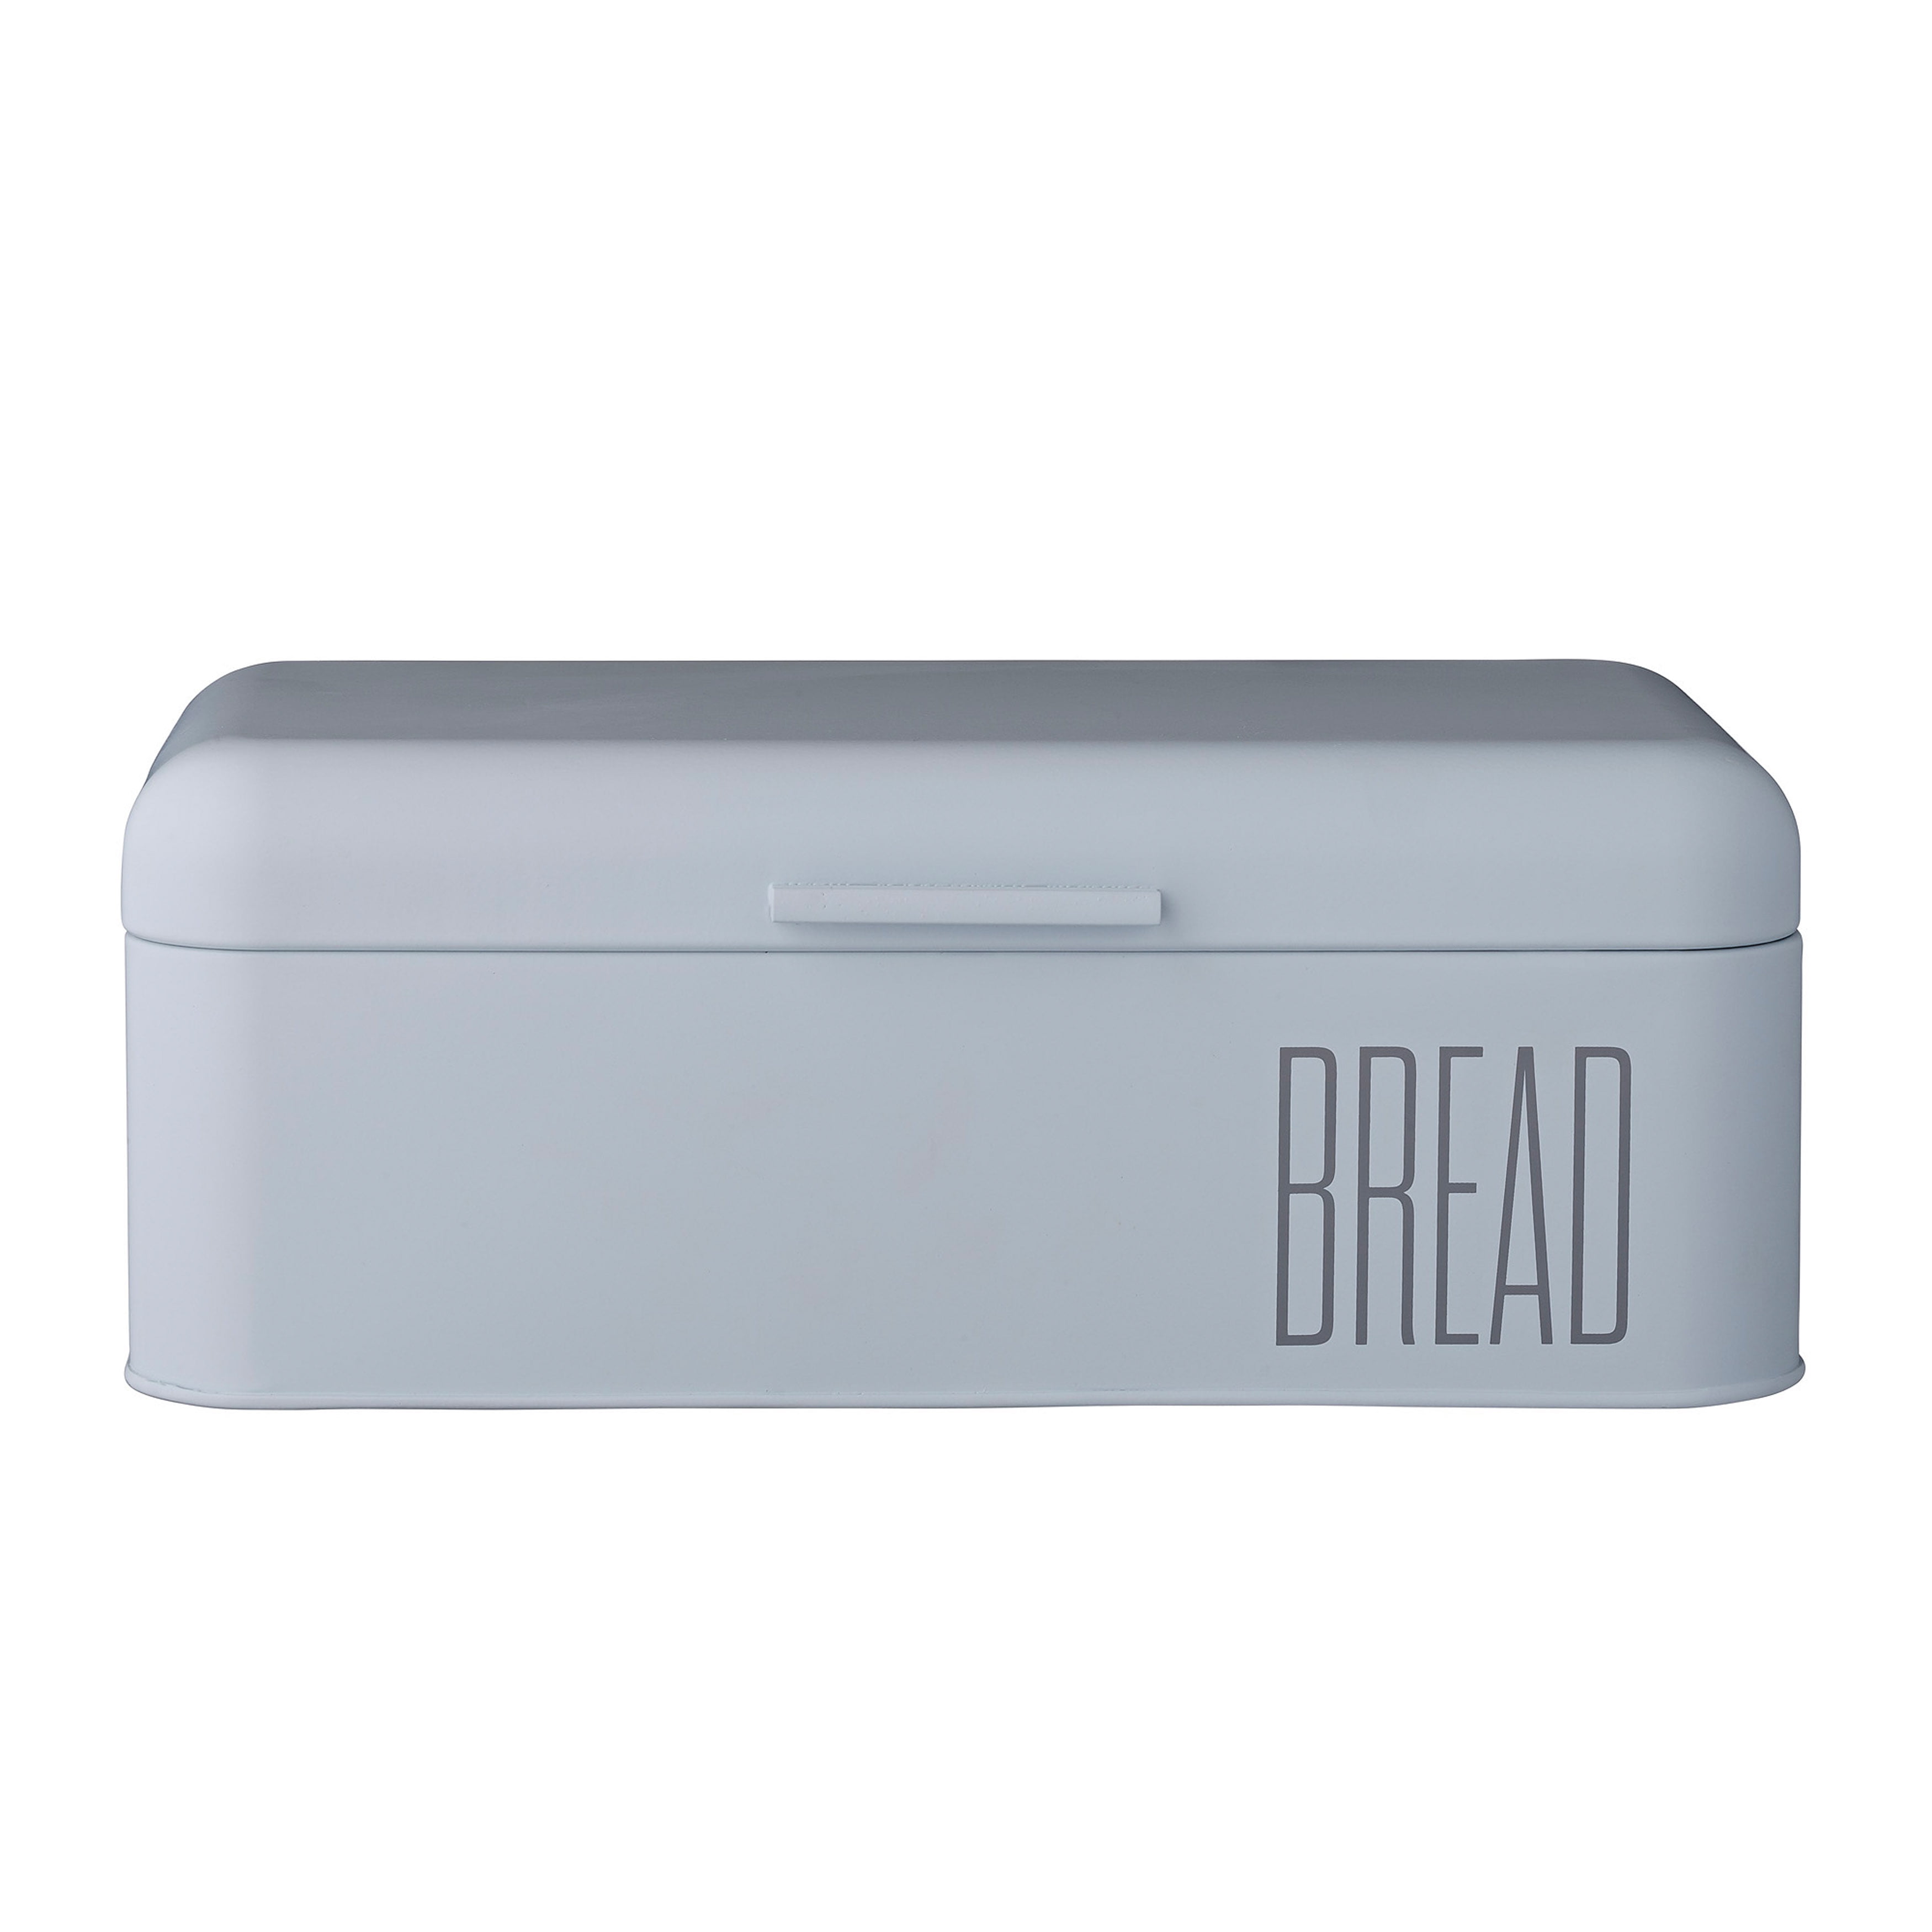 9 Piece Bakery Box brötchenbox Bread Container konditorenbox Euro-Standard 15cm Grey 